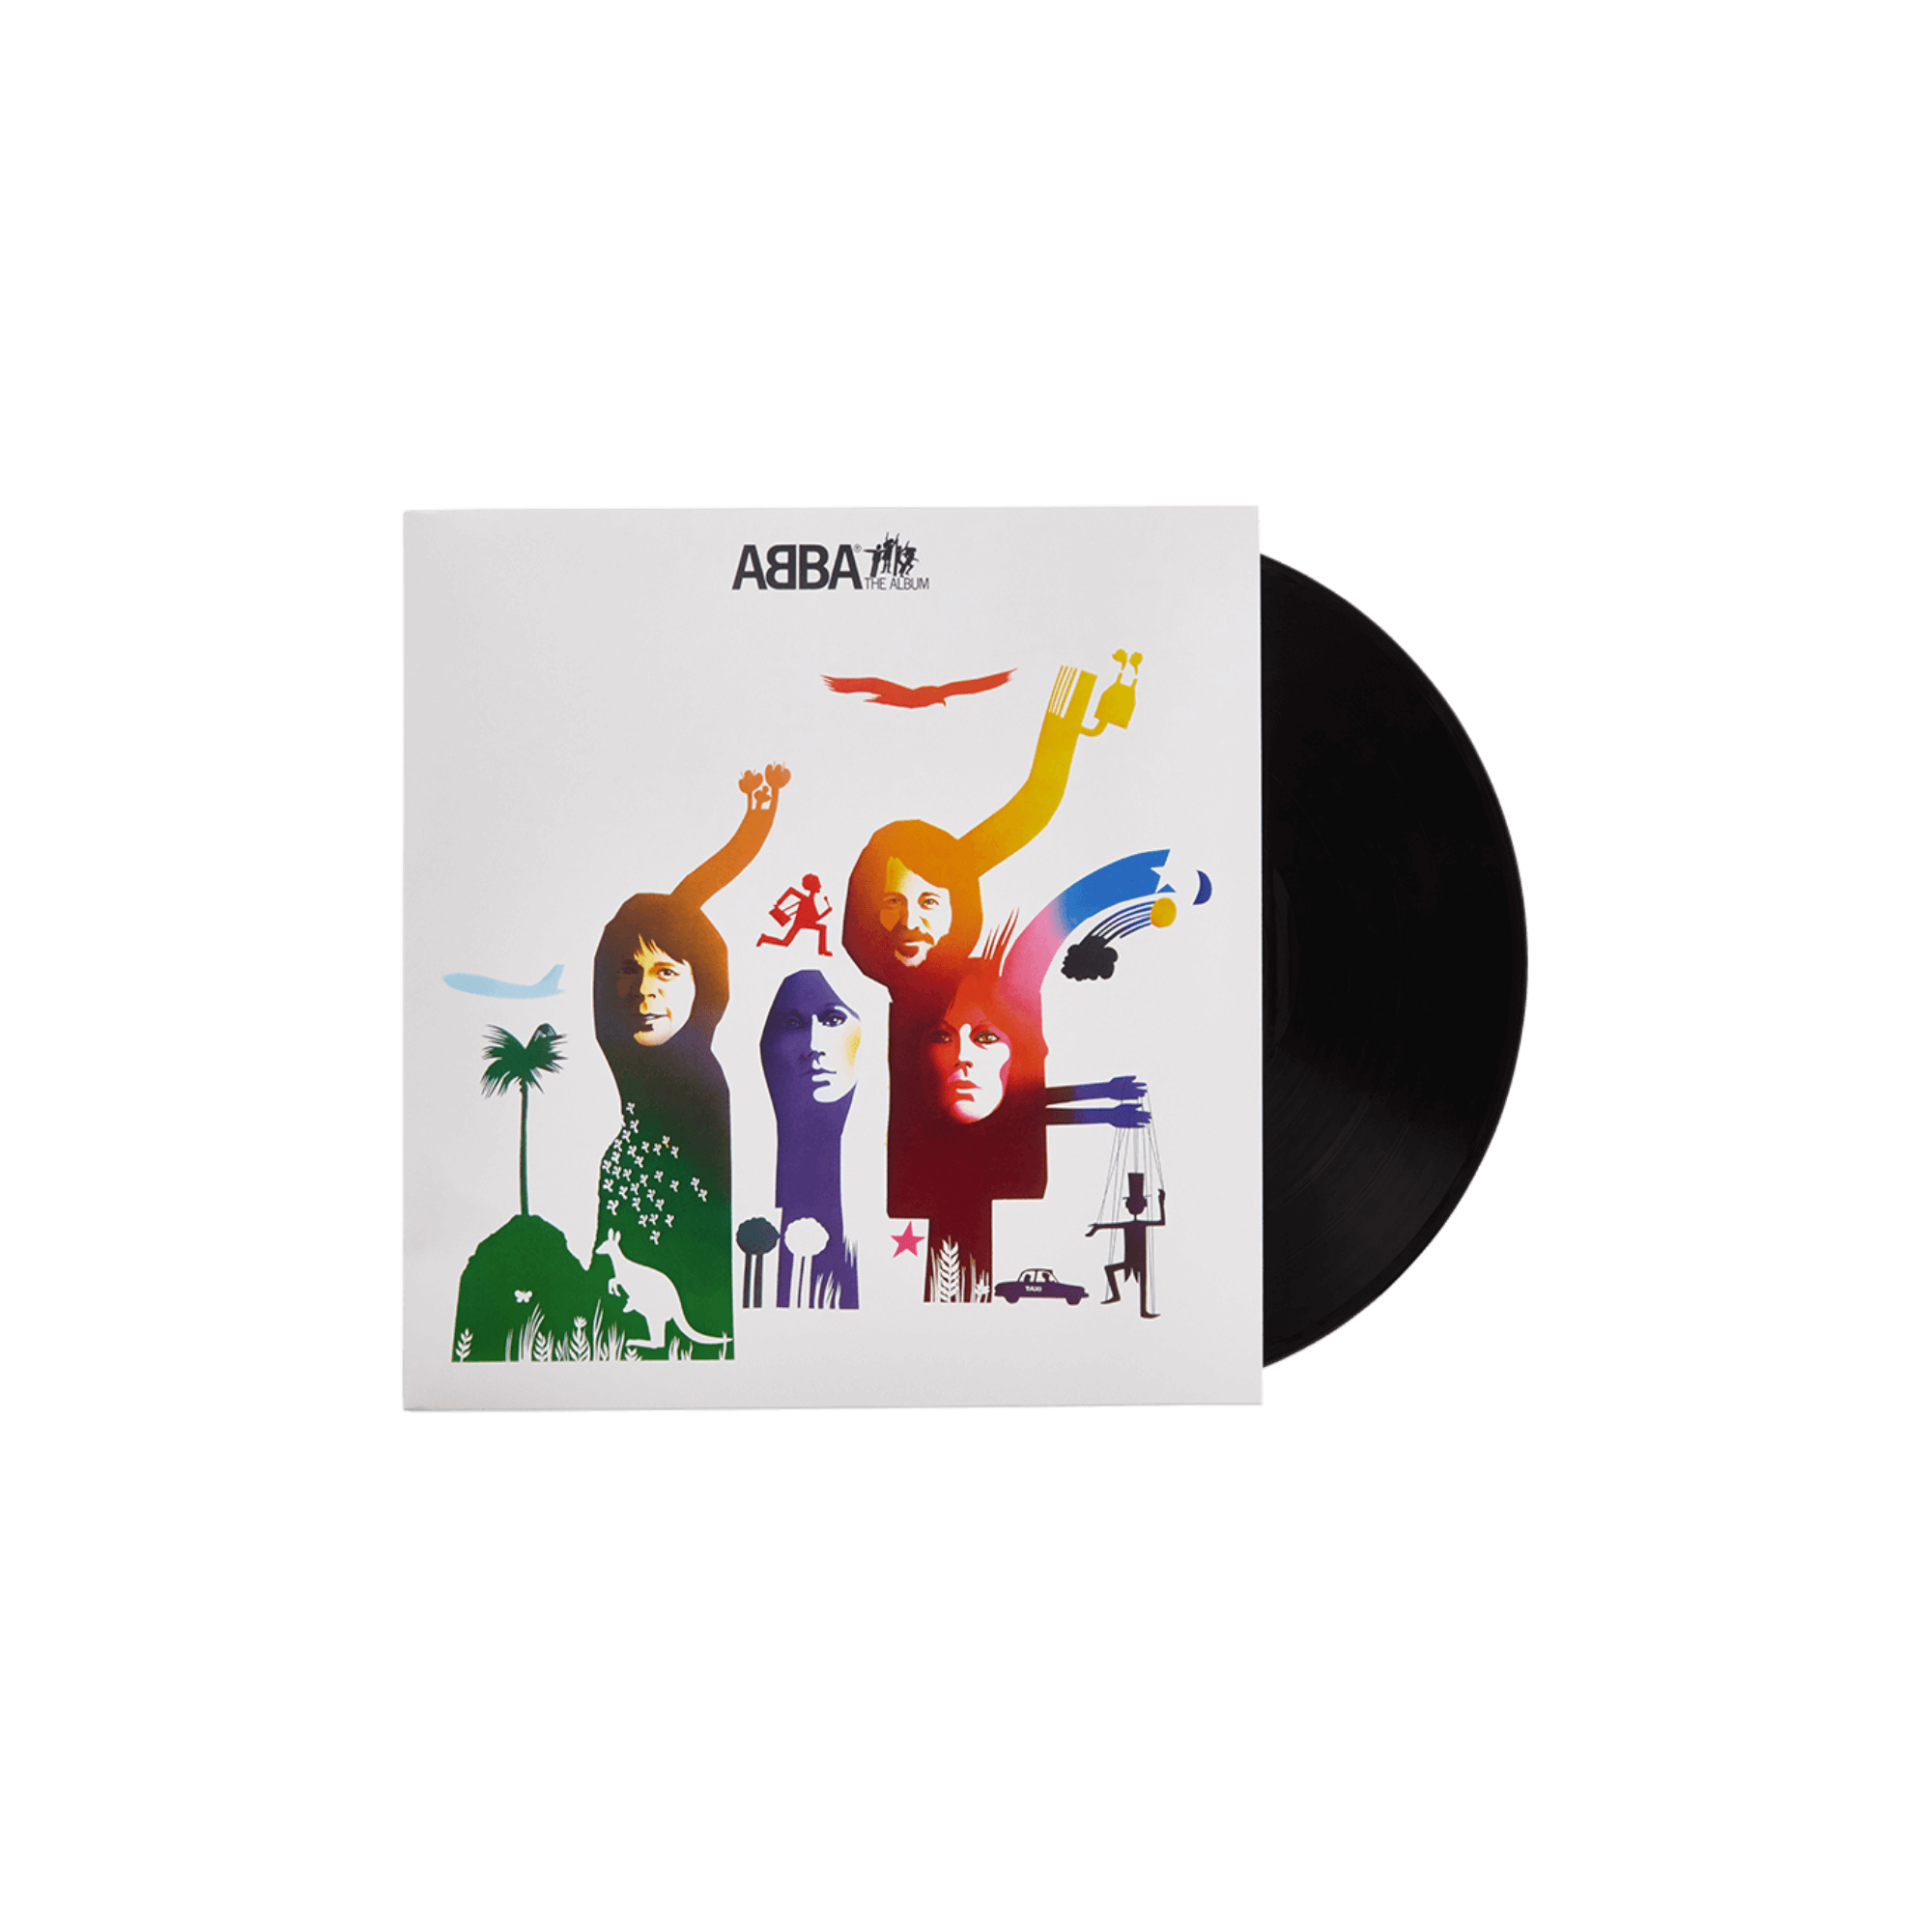 ABBA The Album vinyl